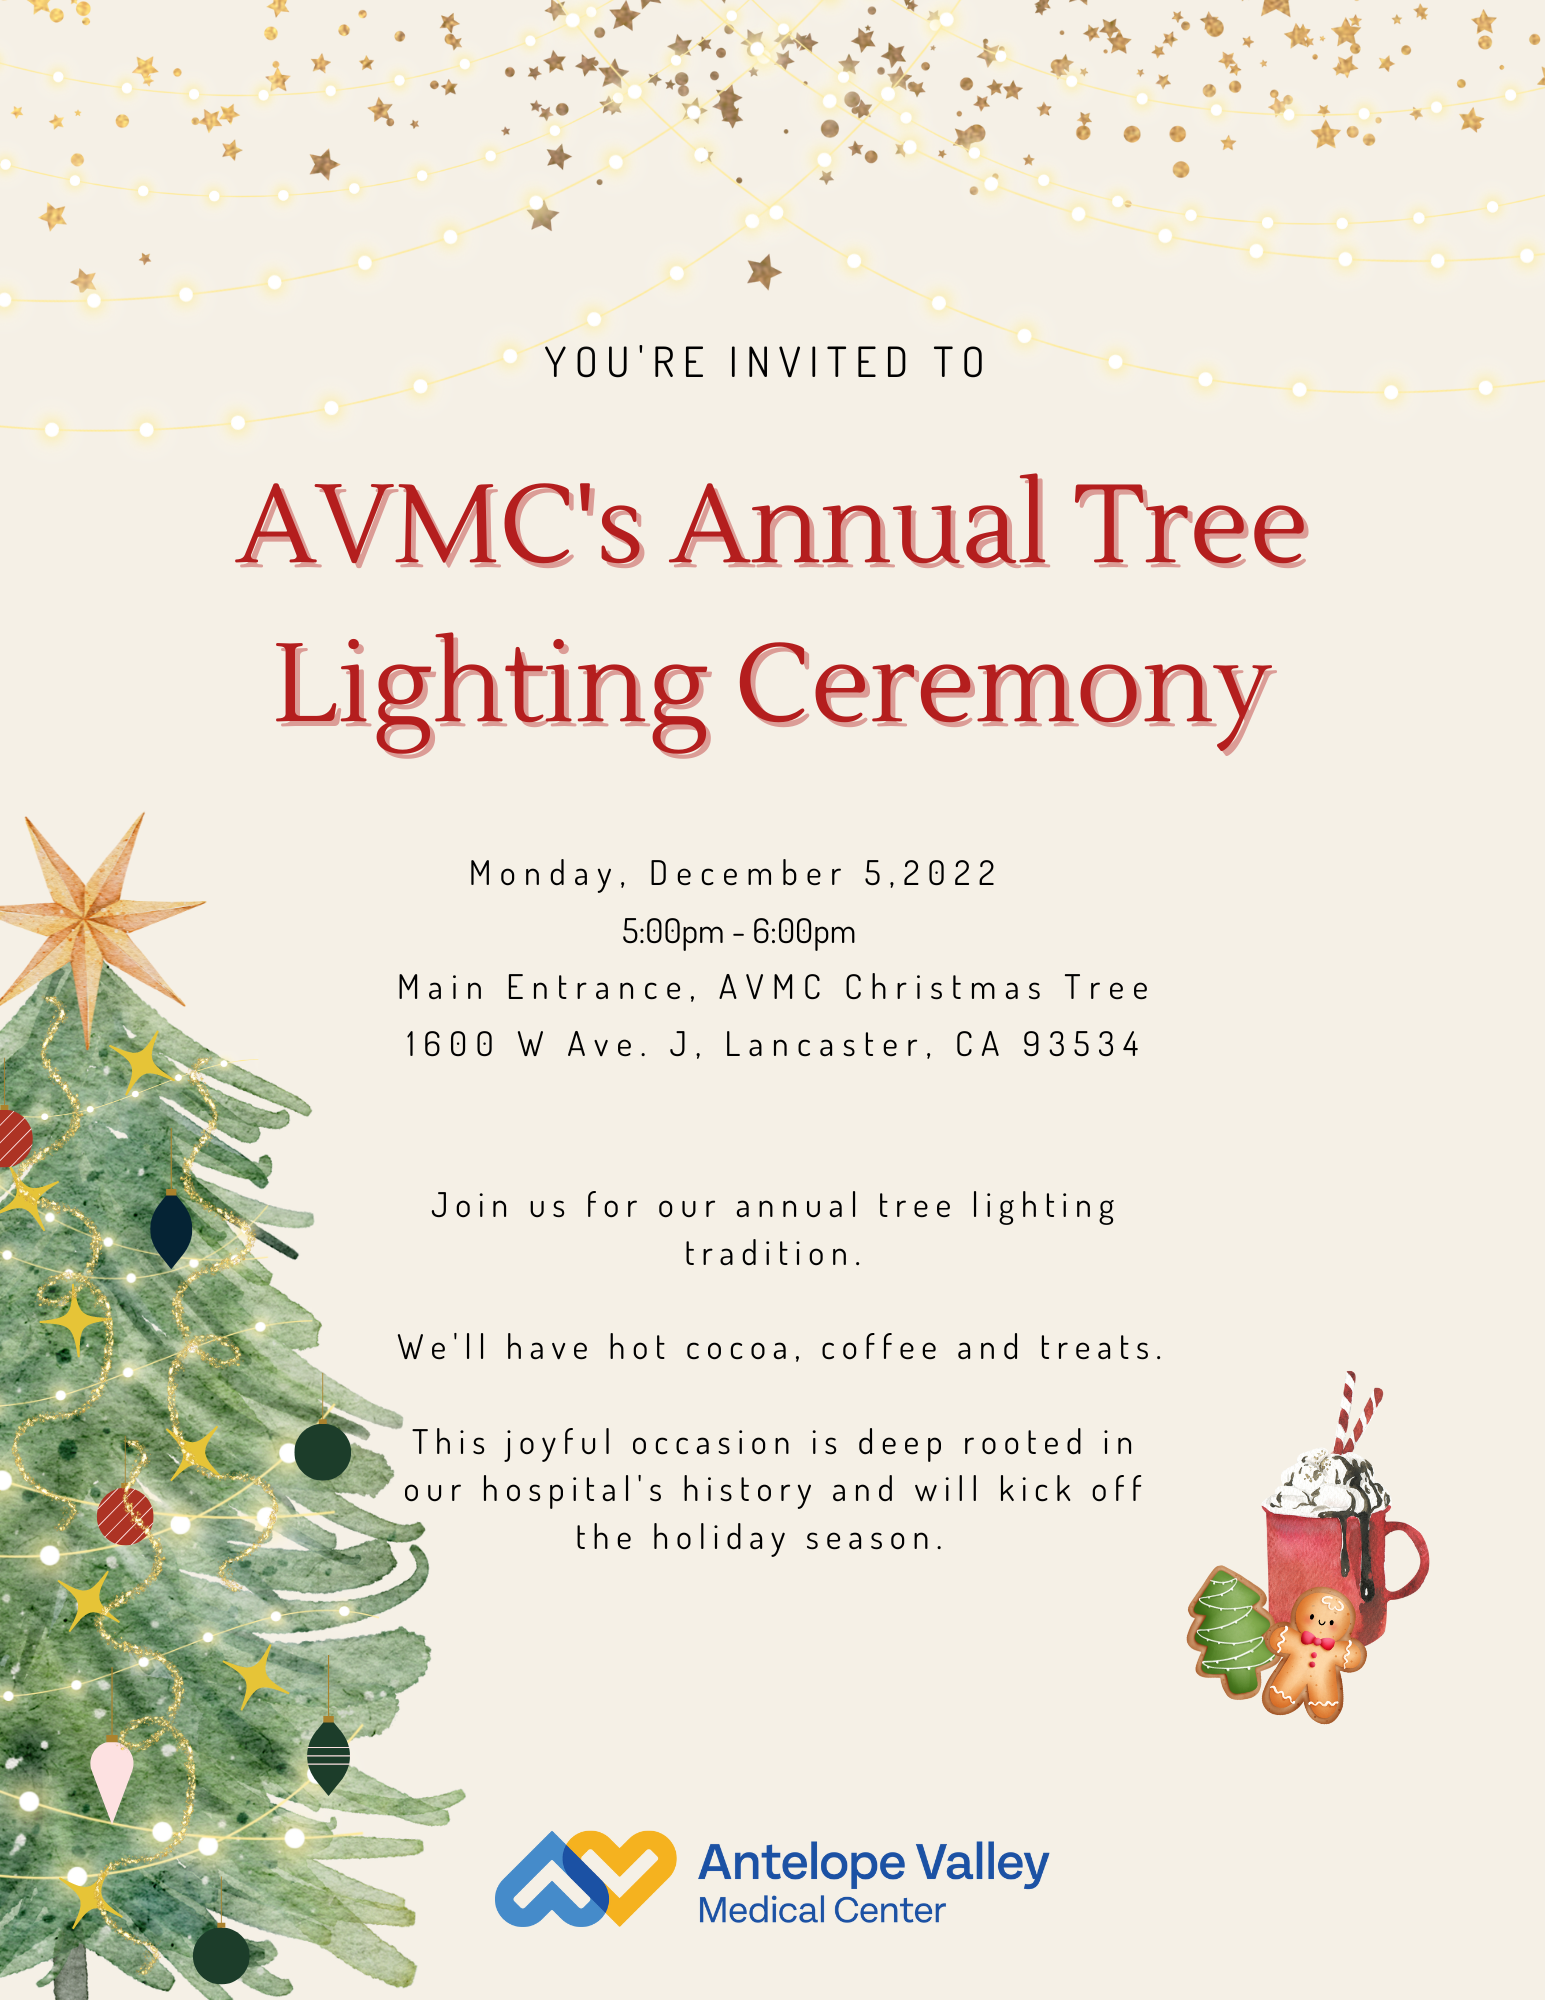 Tree lighting ceremony flyer